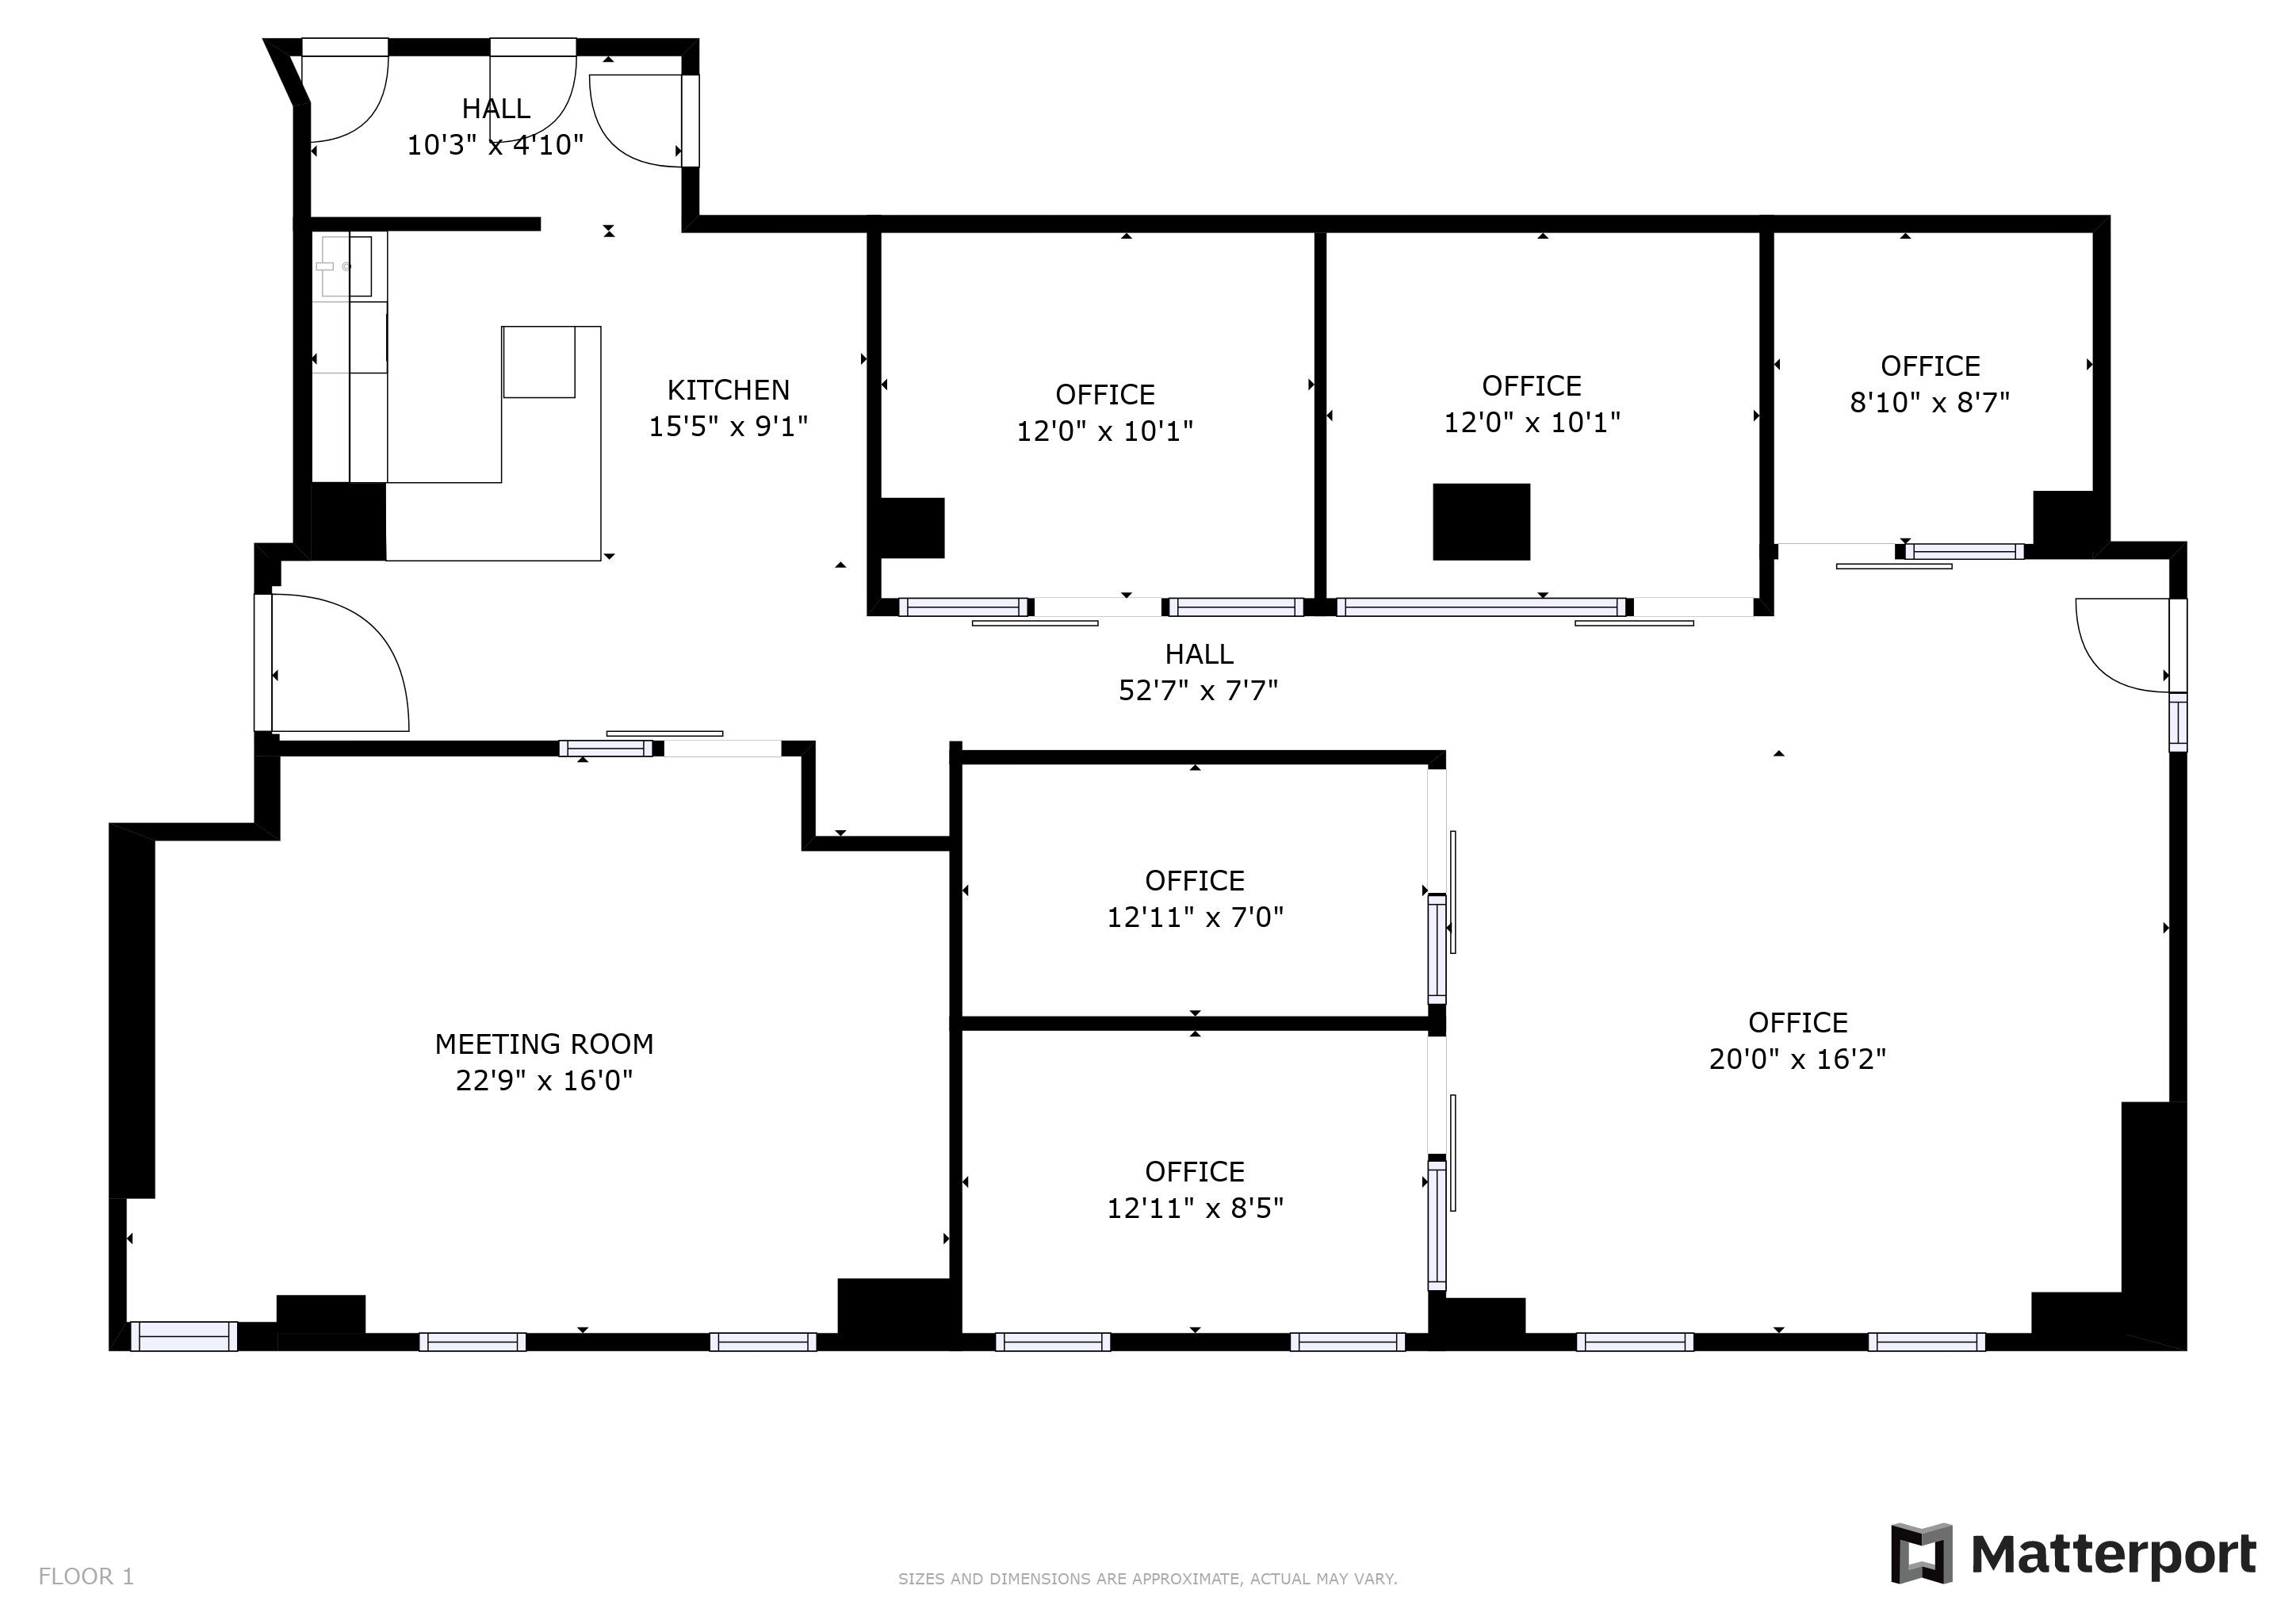 48 West 39th Street Office Space - Floorplan